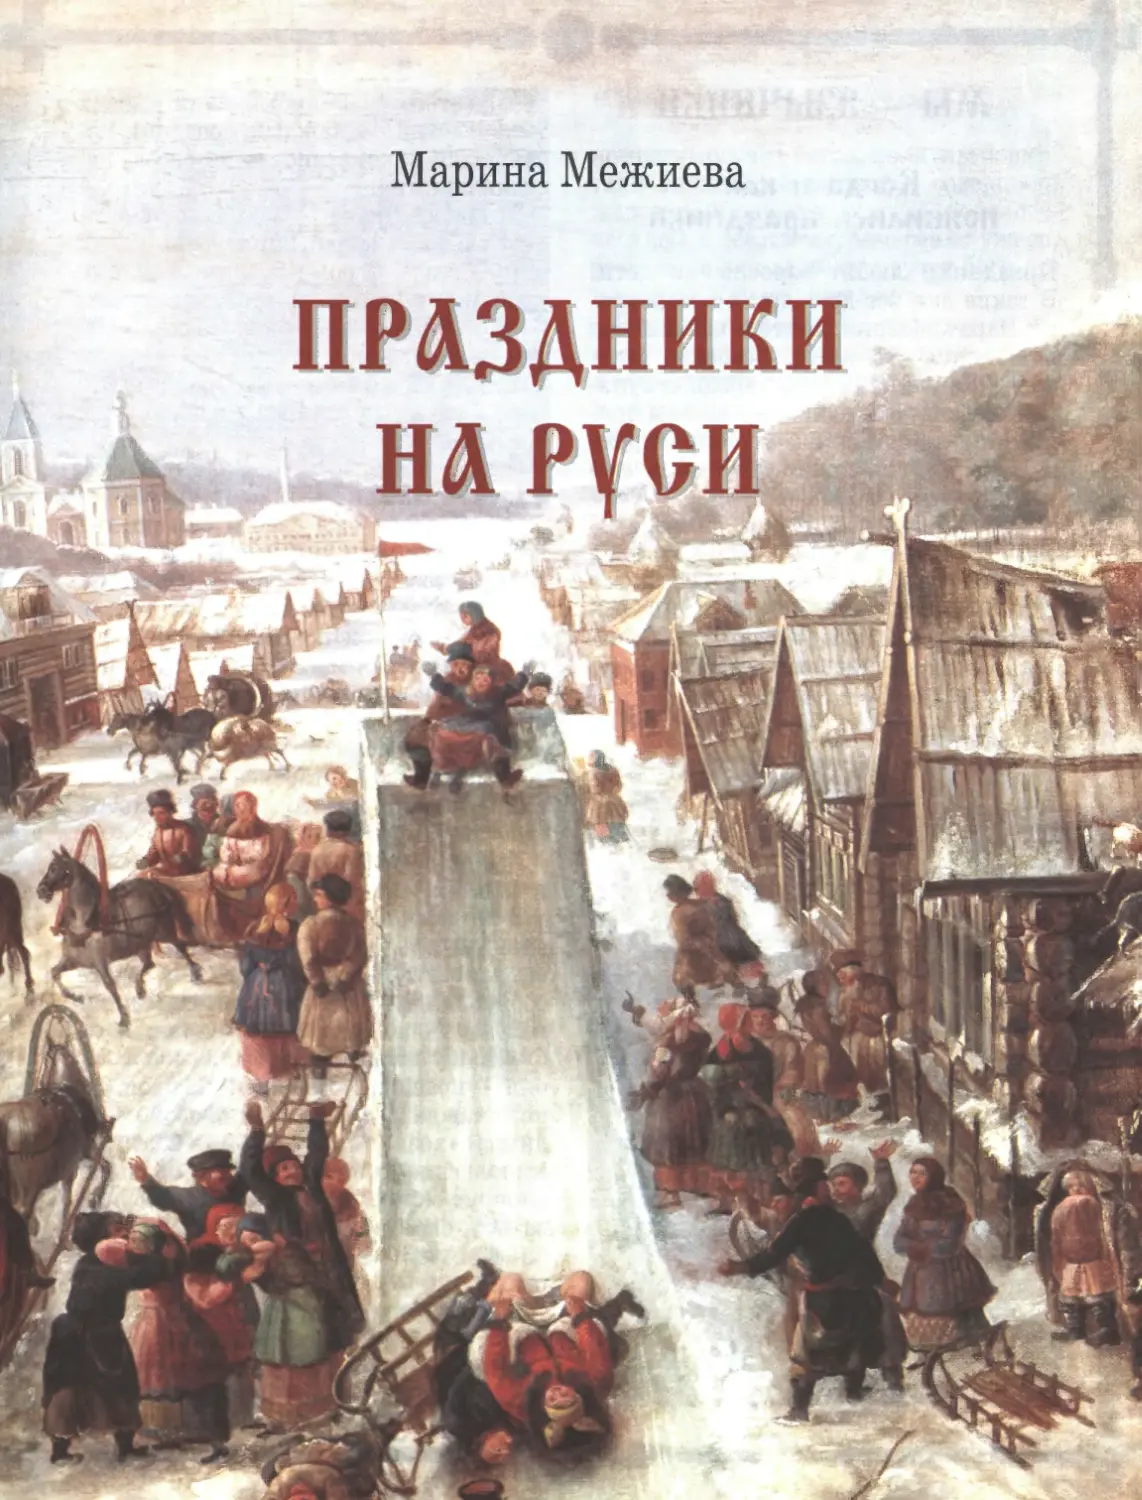 Праздники на Руси (Марина Викторовна Межиева